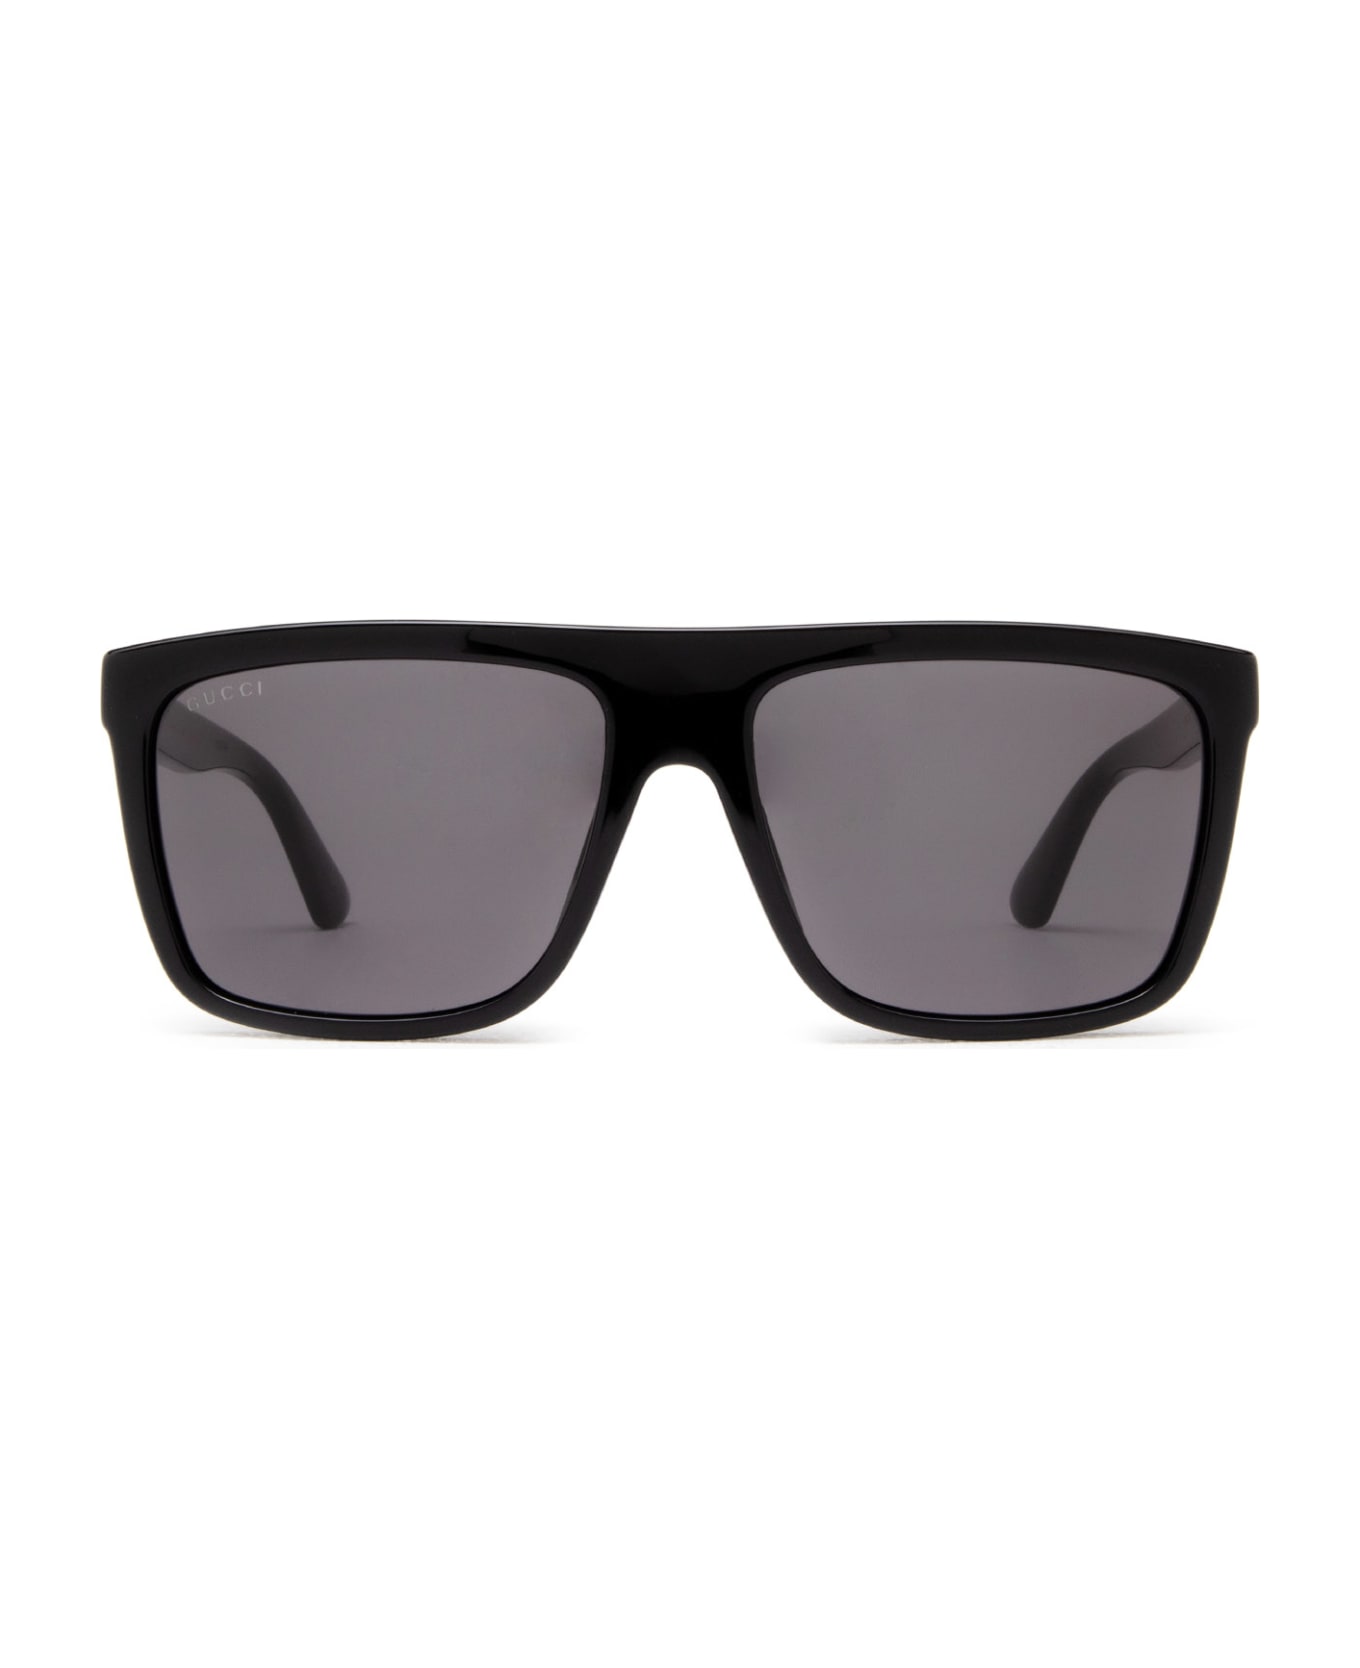 Gucci Eyewear Gg0748s Black Sunglasses - Black